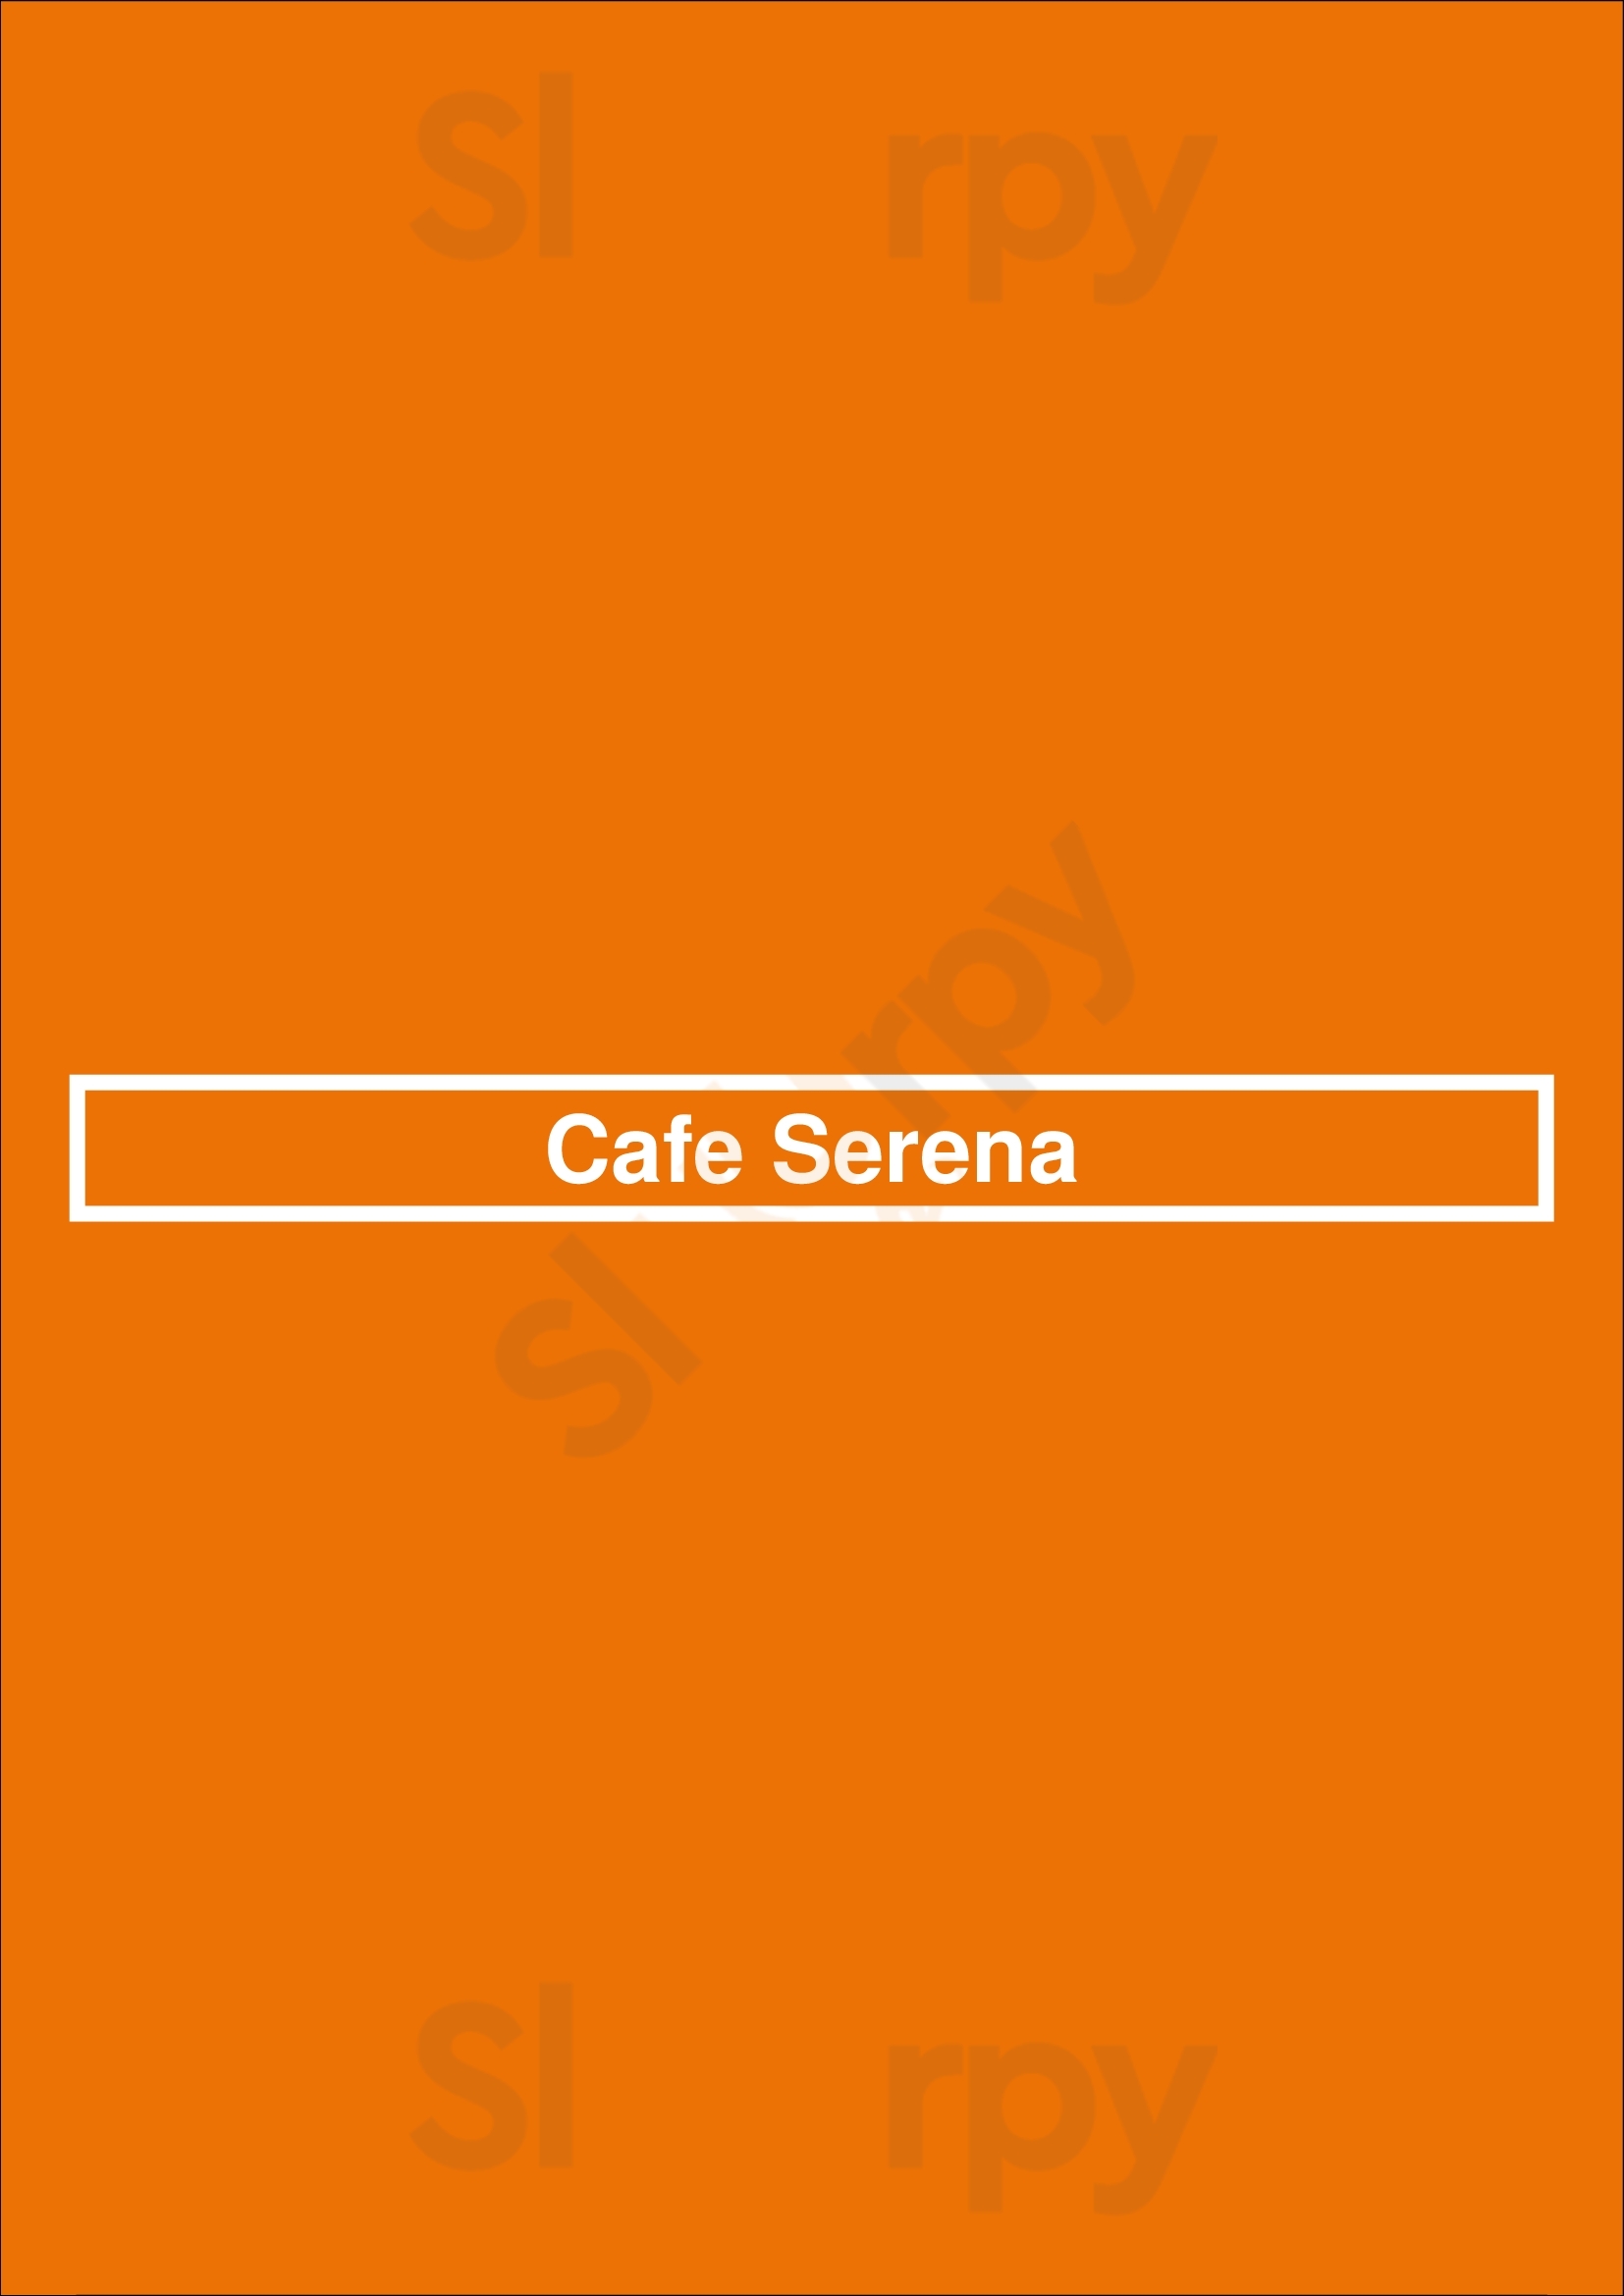 Cafe Serena Glasgow Menu - 1